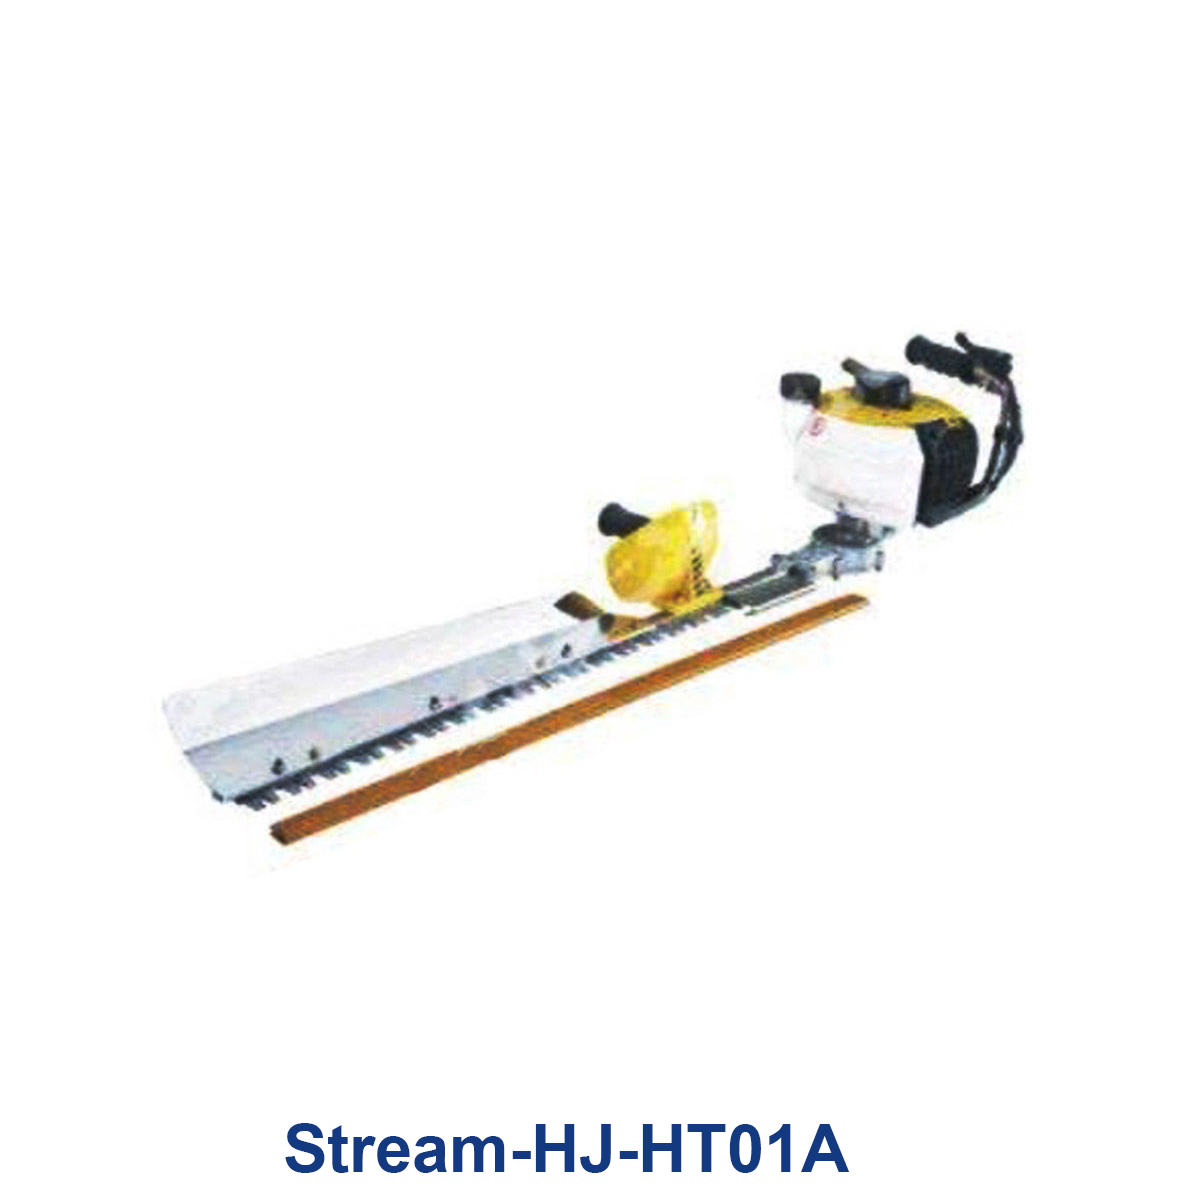 Stream-HJ-HT01A